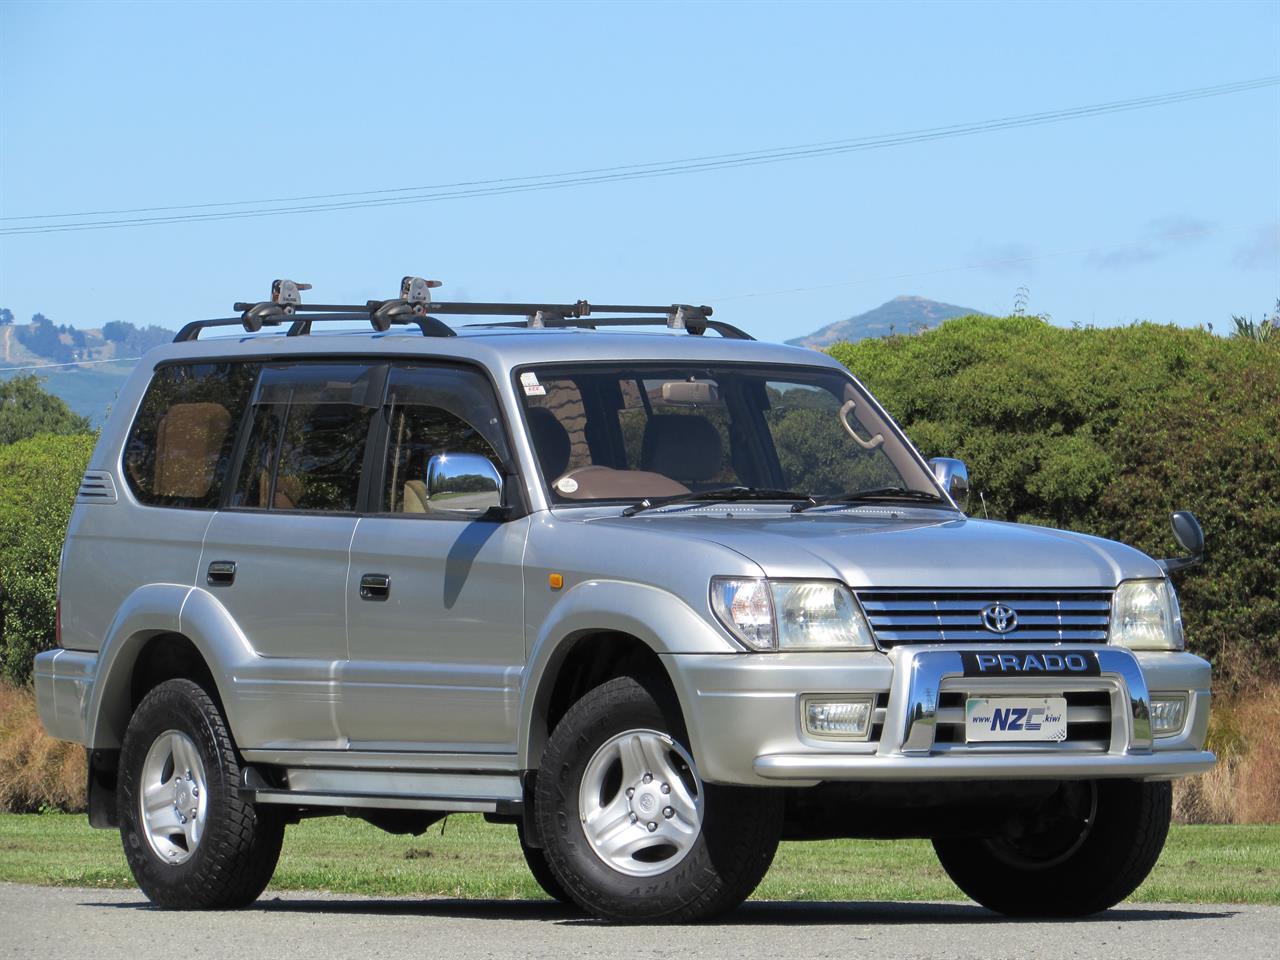 NZC 2001 Toyota Land Cruiser Prado just arrived to Christchurch